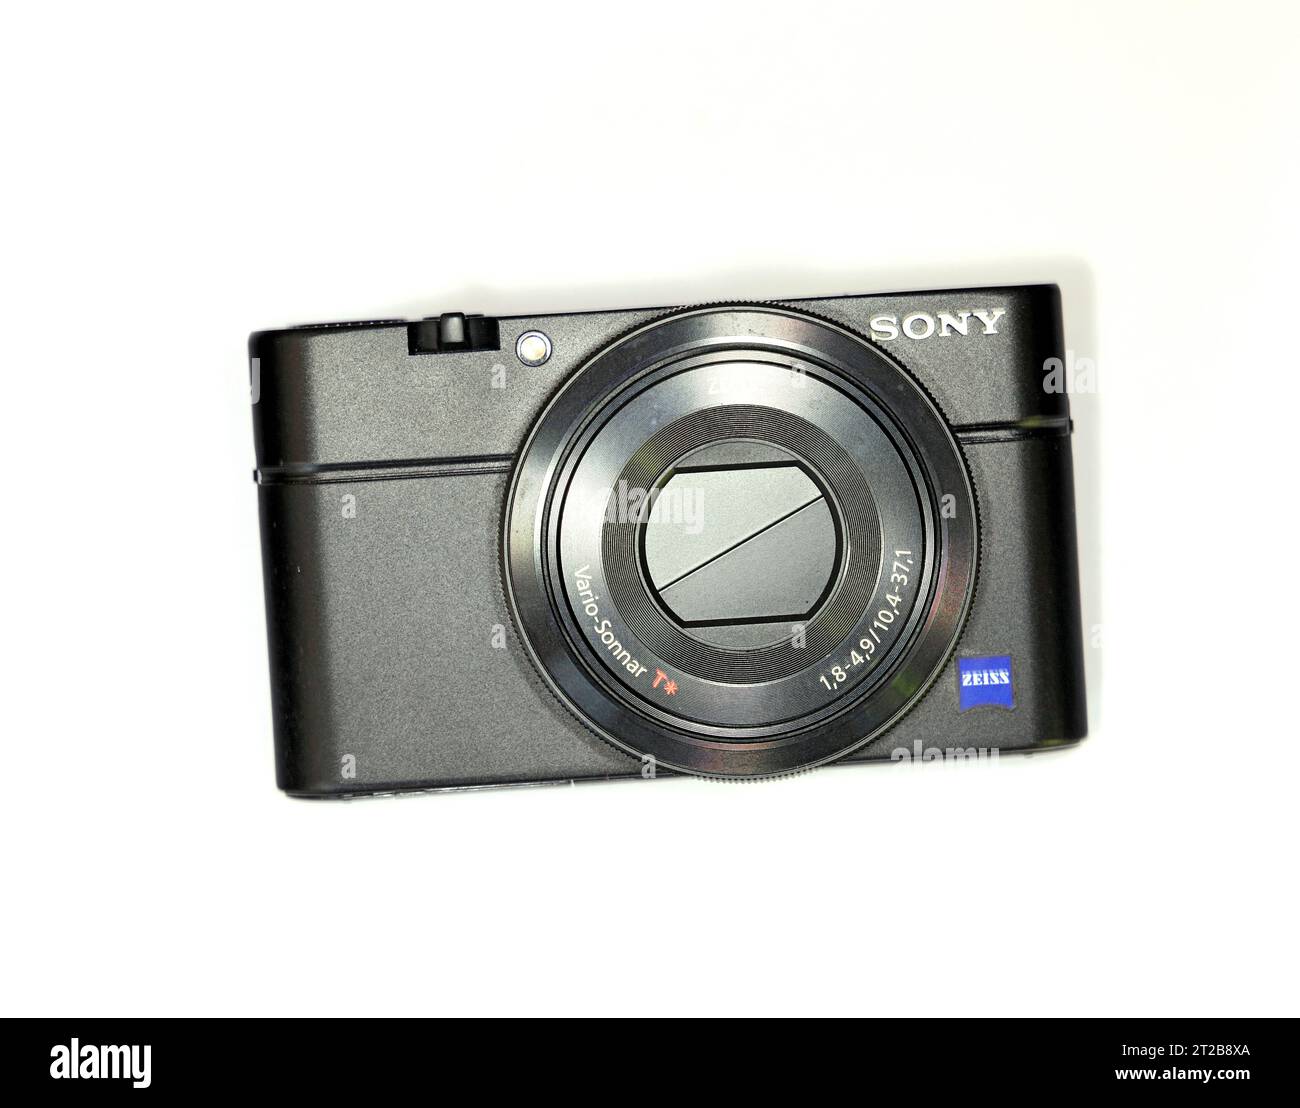 Sony Cyber shot RX100 compact digital camera. Stock Photo